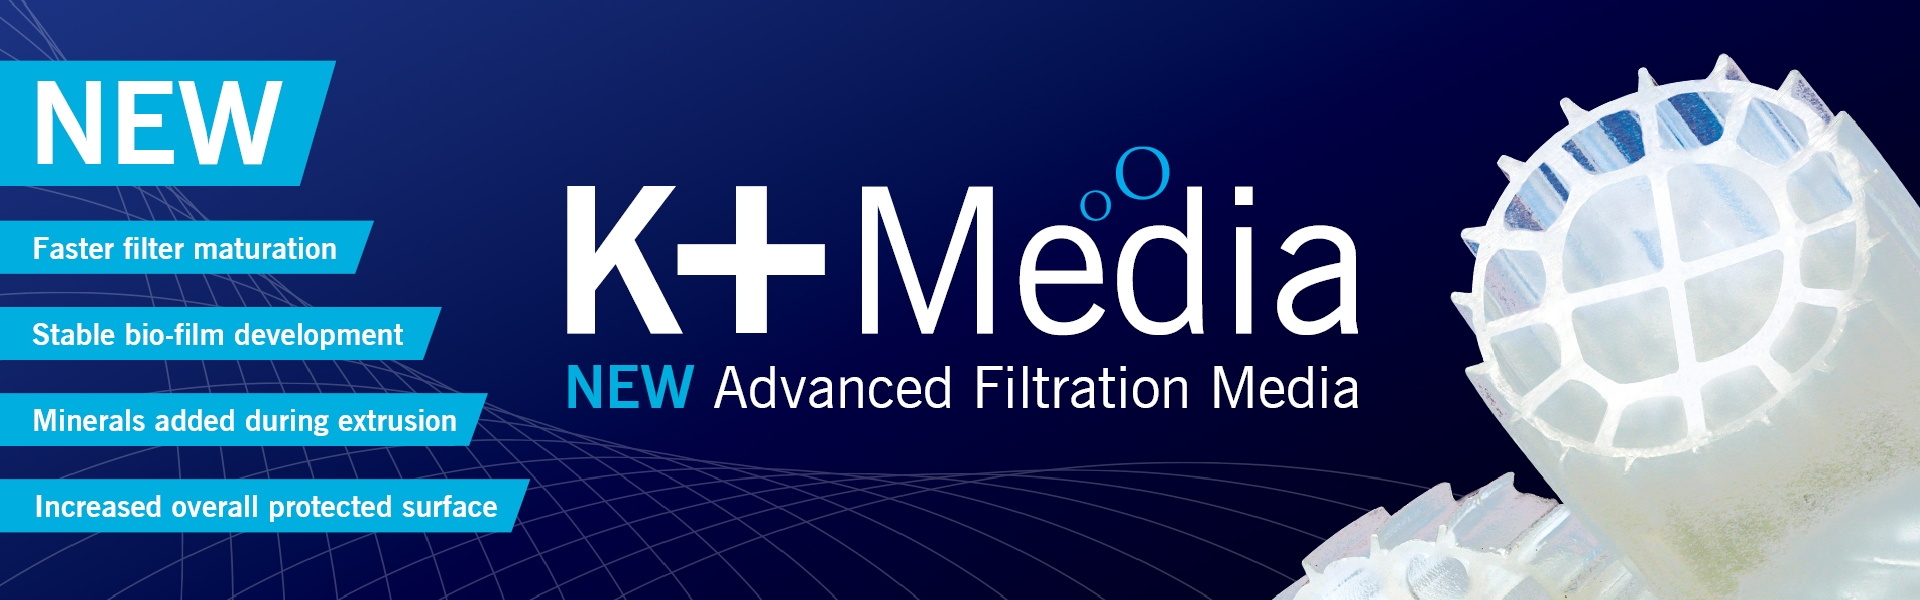  Evolution Aqua K+ Advanced Filter Media - 50 Liter